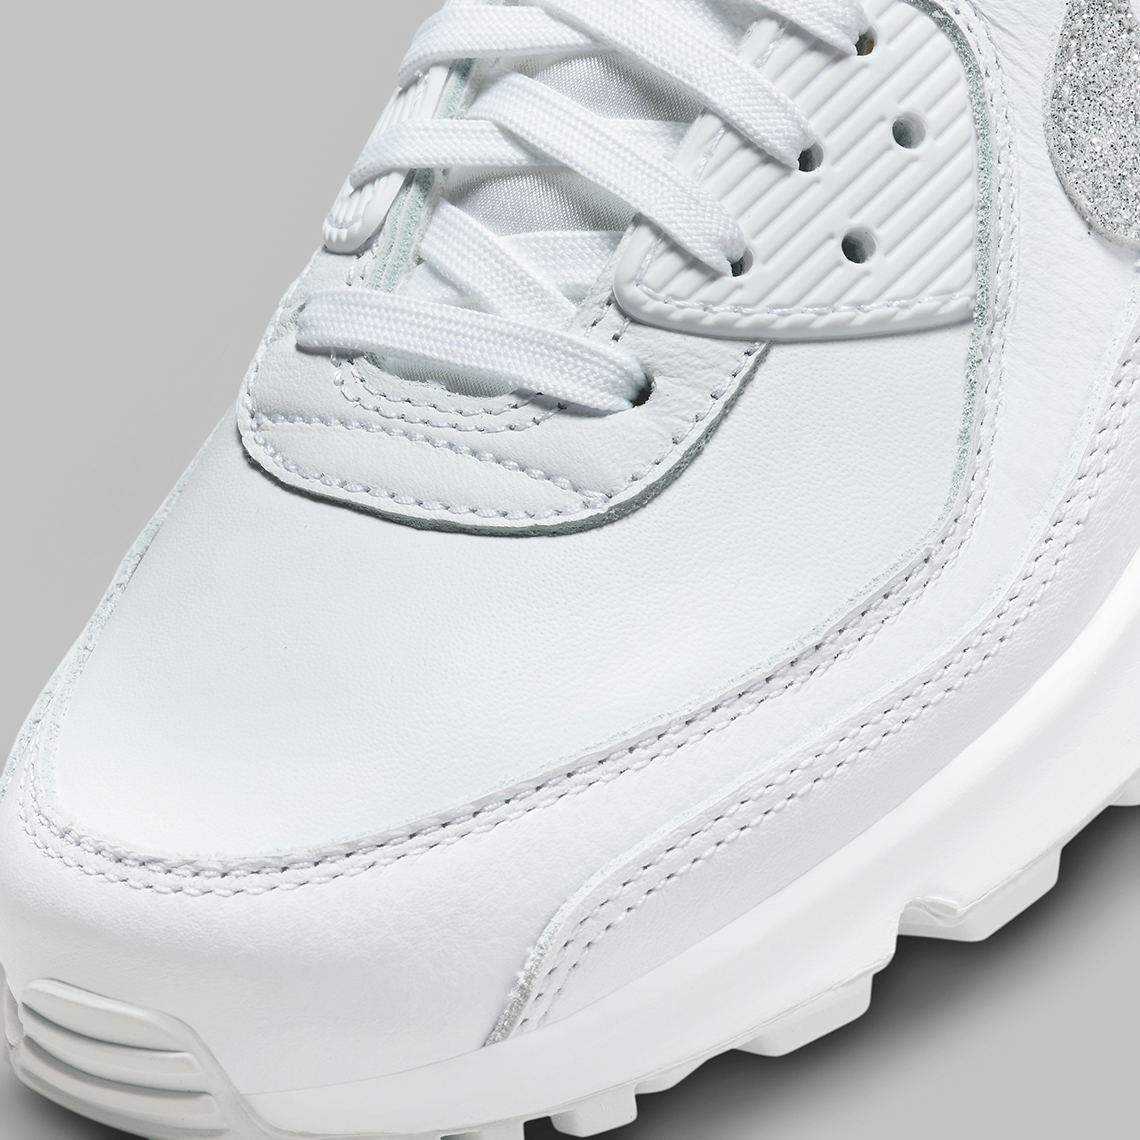 cheap nike hyperfuse high tops sneakers White Silver Fj4579 100 3